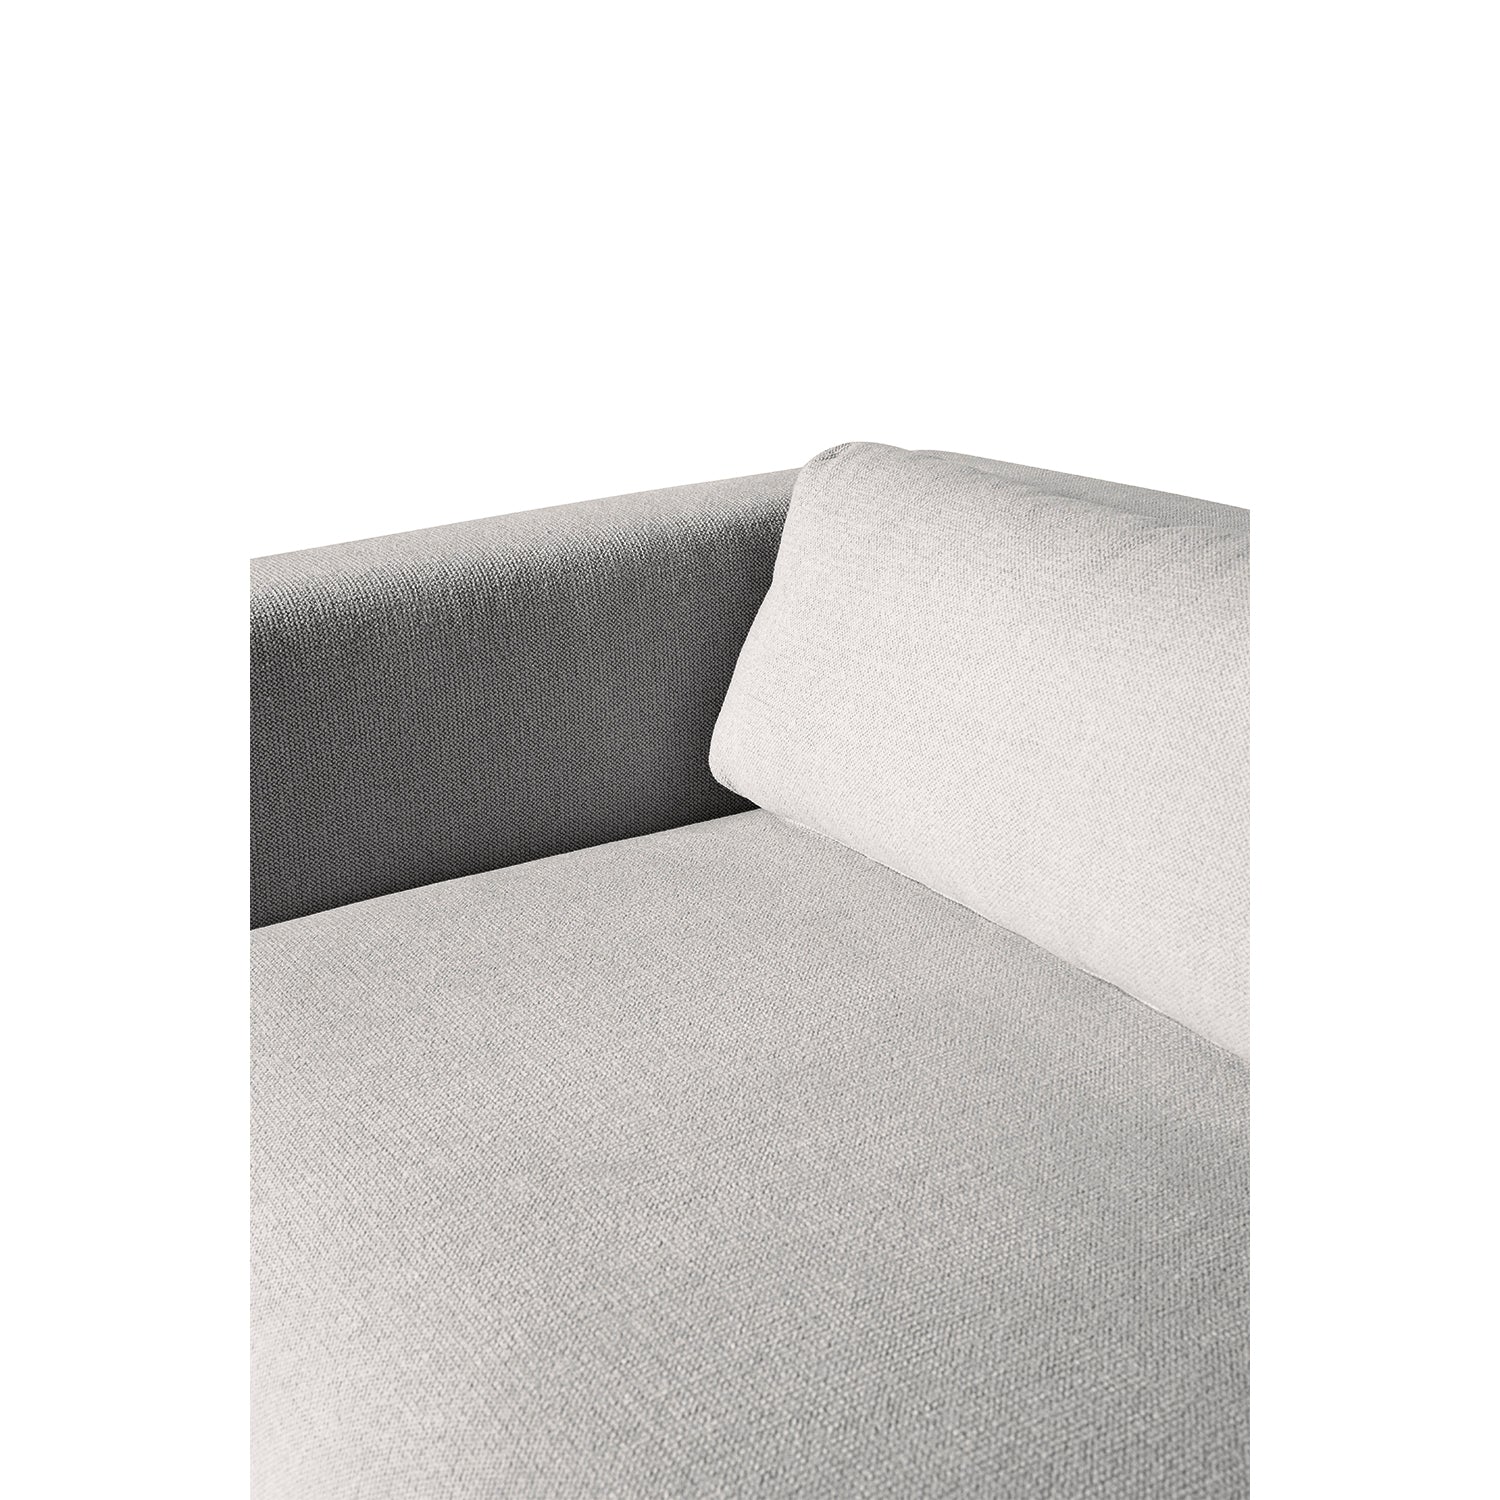 Manhattan chaiselong sofa højrevendt - Møbelkompagniet